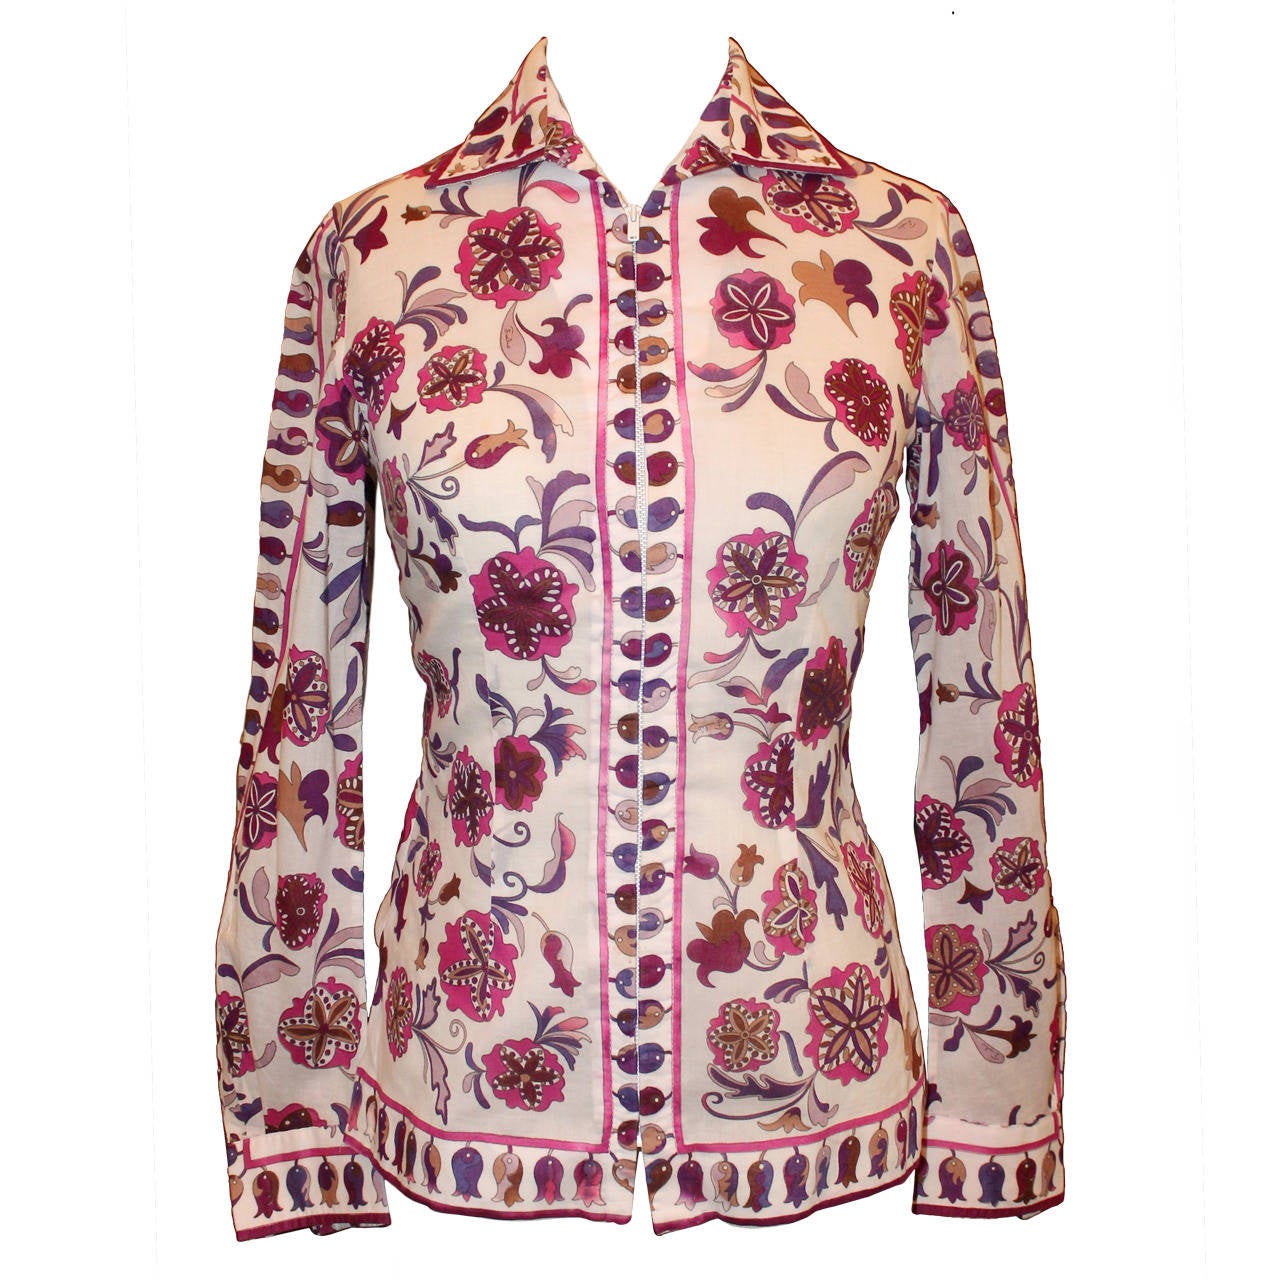 Pucci Vintage White, Purple, Pink Floral Print Jacket/Shirt - circa 1960s - S For Sale